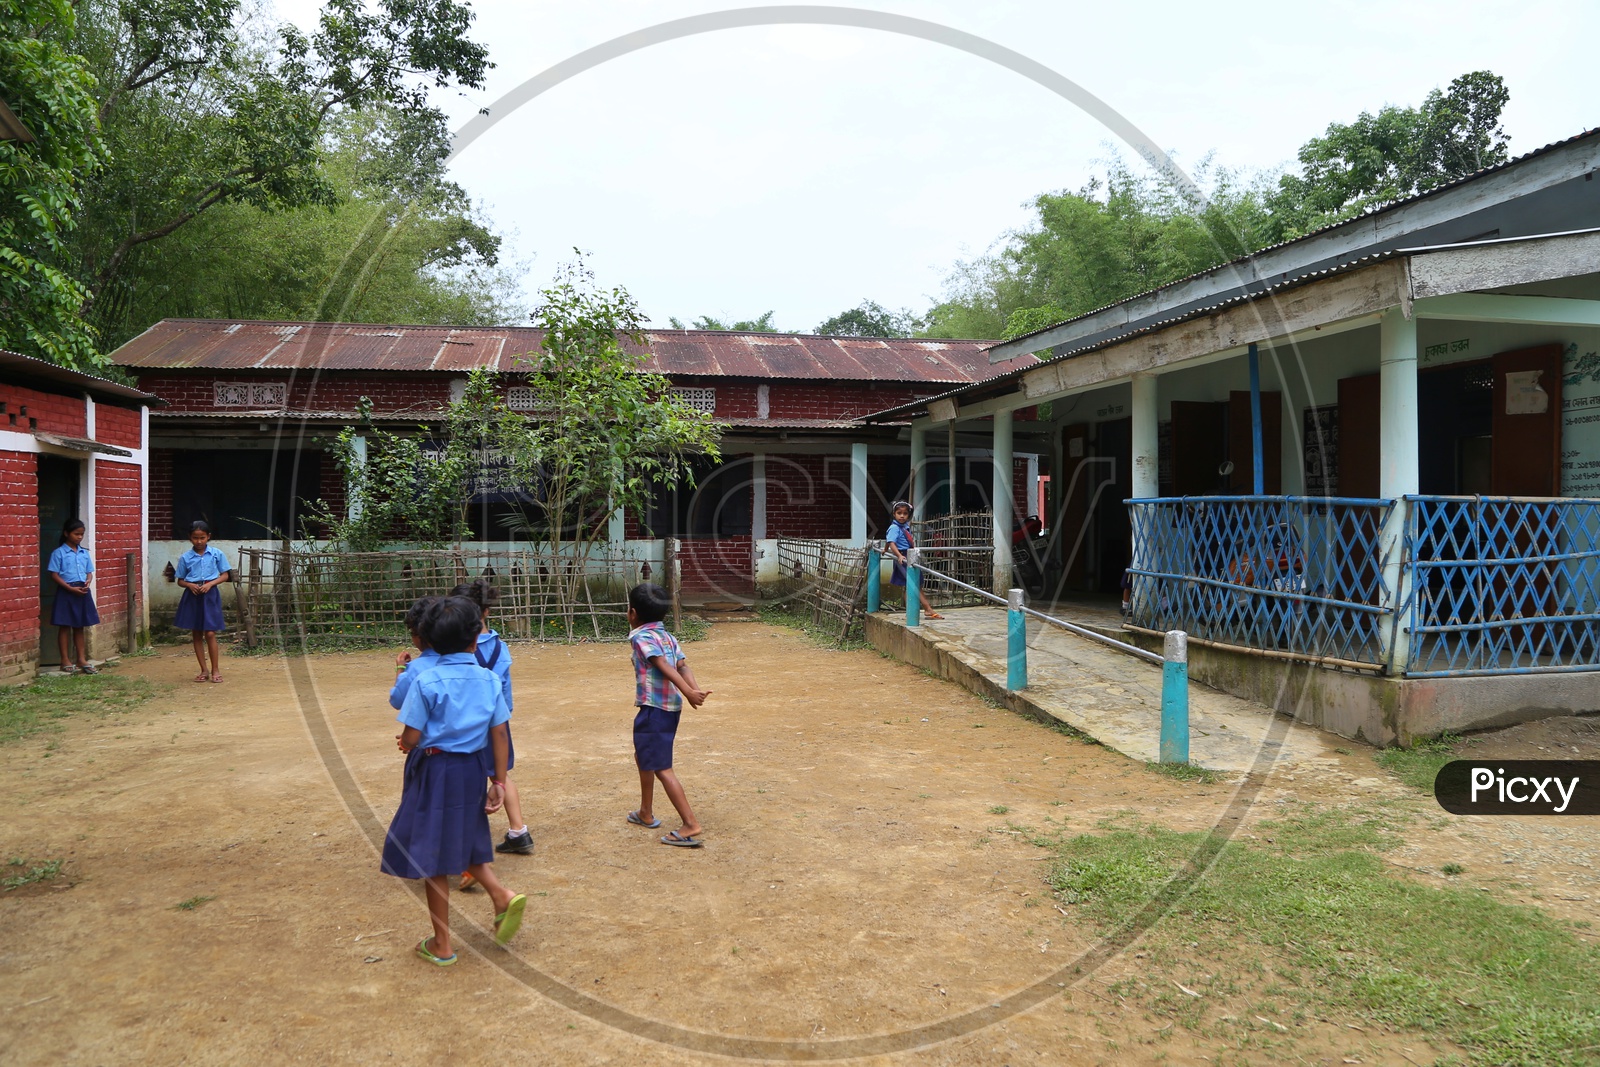 School Children Or Students in a Rural Village School